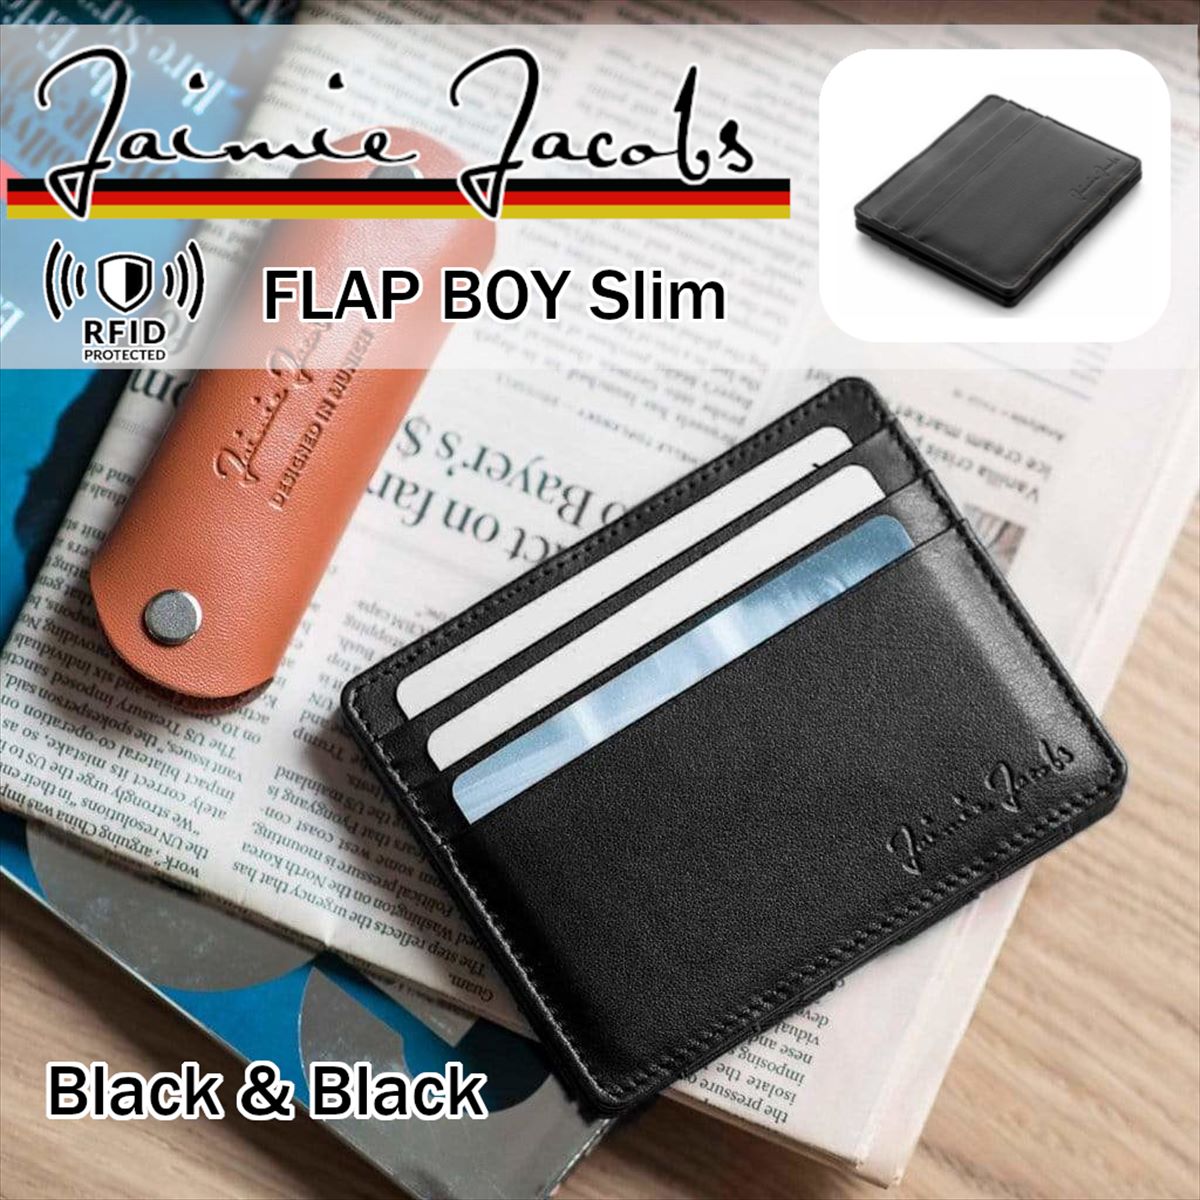 Jaimie Jacobs FLAP BOY SLIM 魔法の財布 （ スキミング防止 超コンパクト ギフトボックス付き ） 【 正規輸入品 】（ 日本独占販売権取得) かっこいい カッコイイ オシャレ おしゃれ